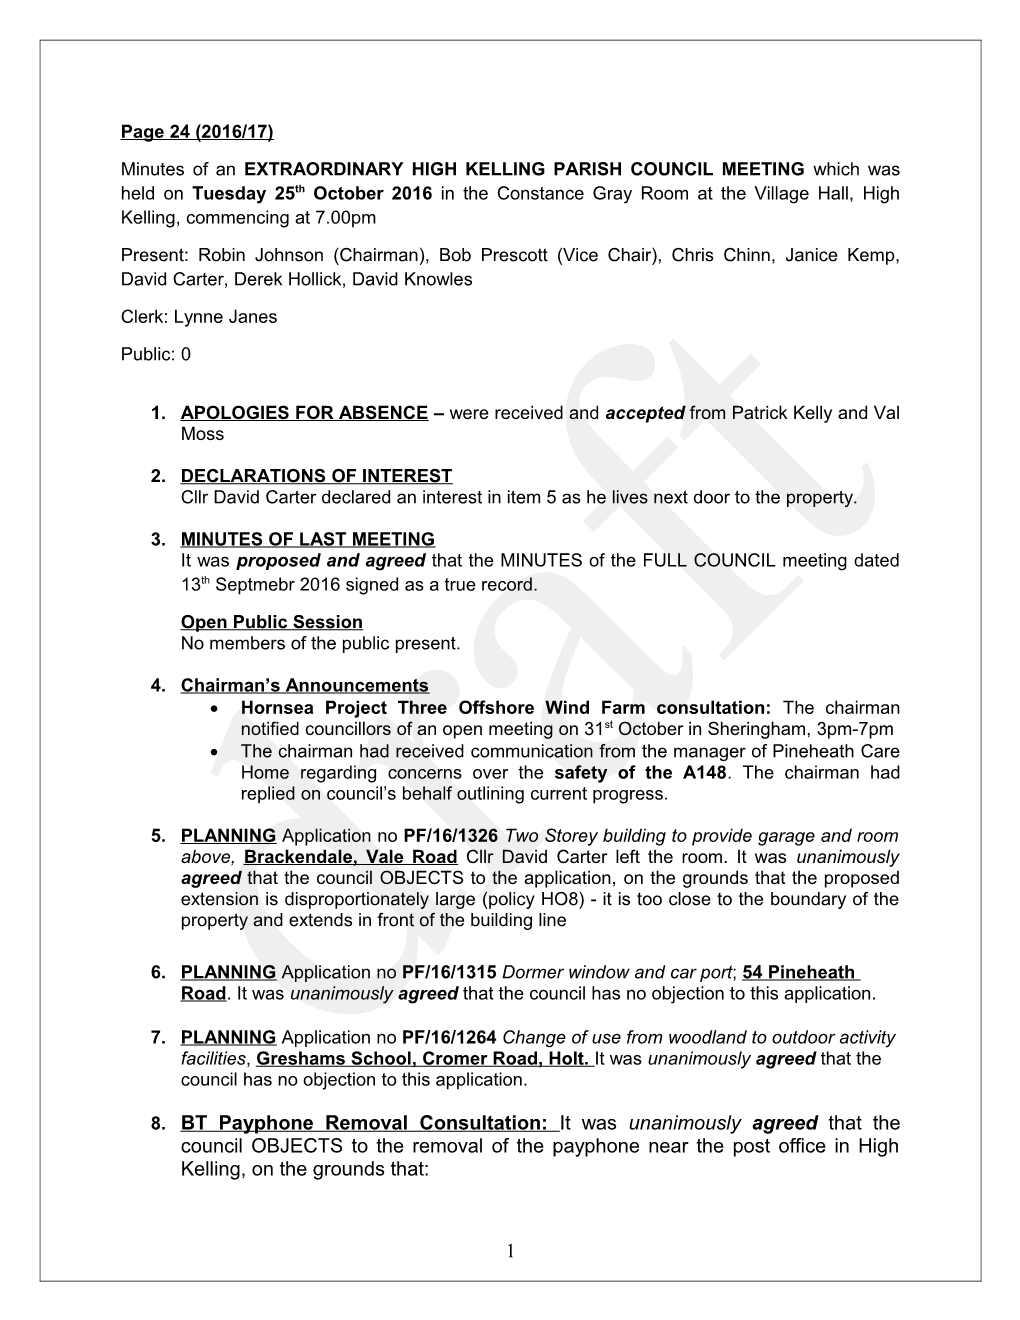 High Kelling Parish Council Notice